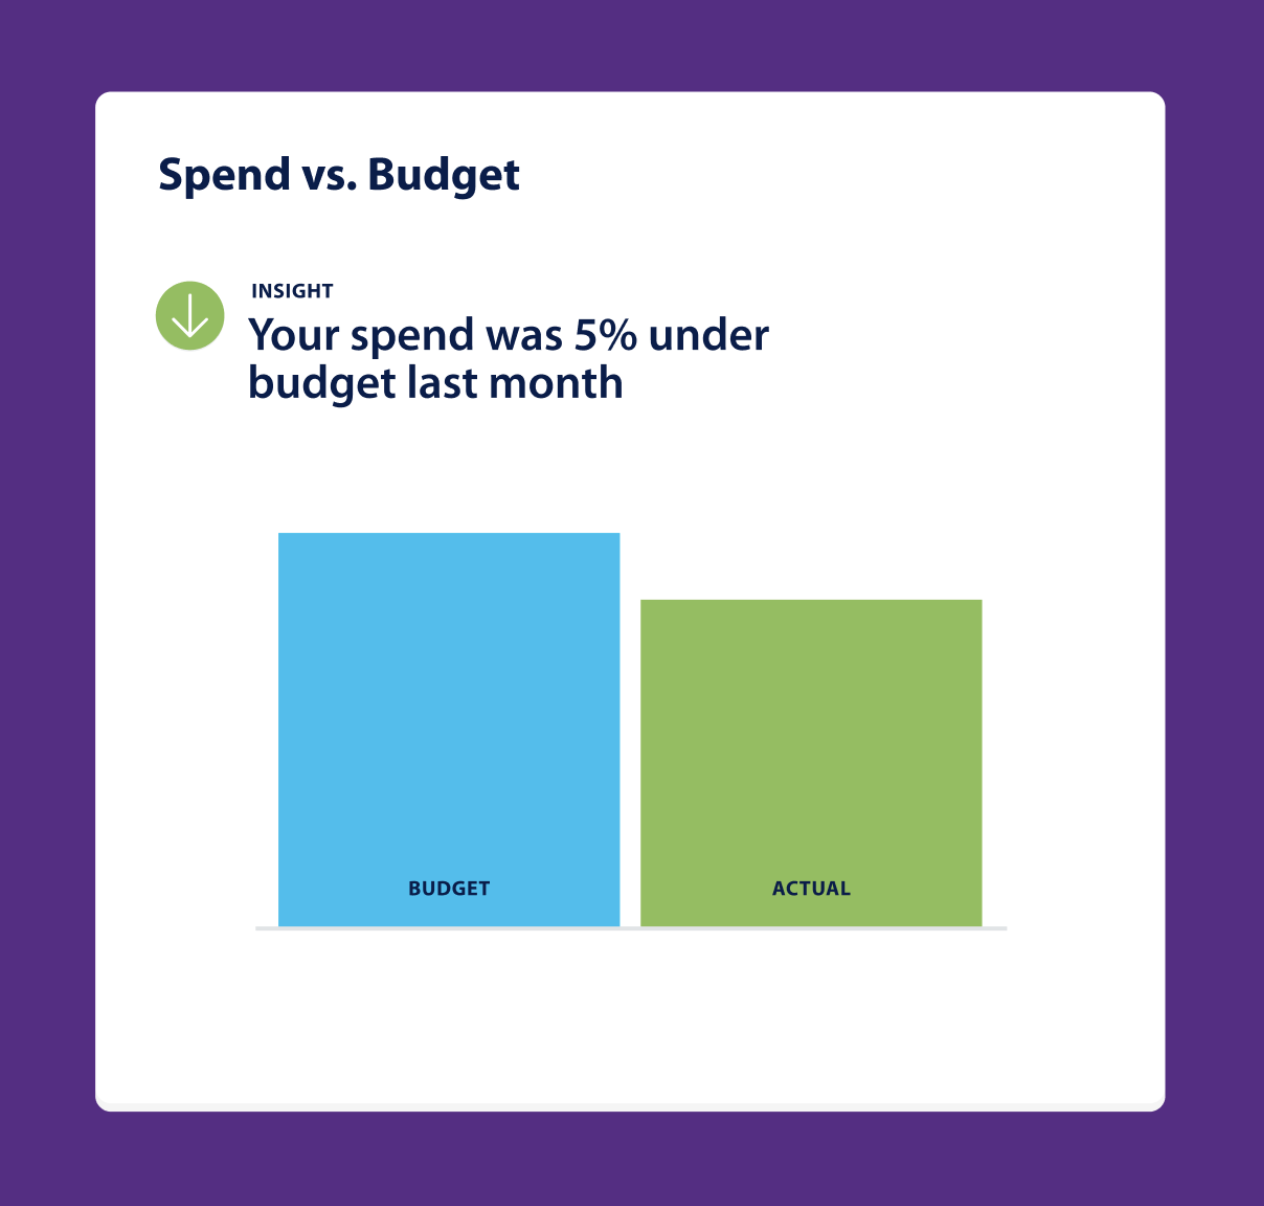 Spend vs Budget visualized in software platform